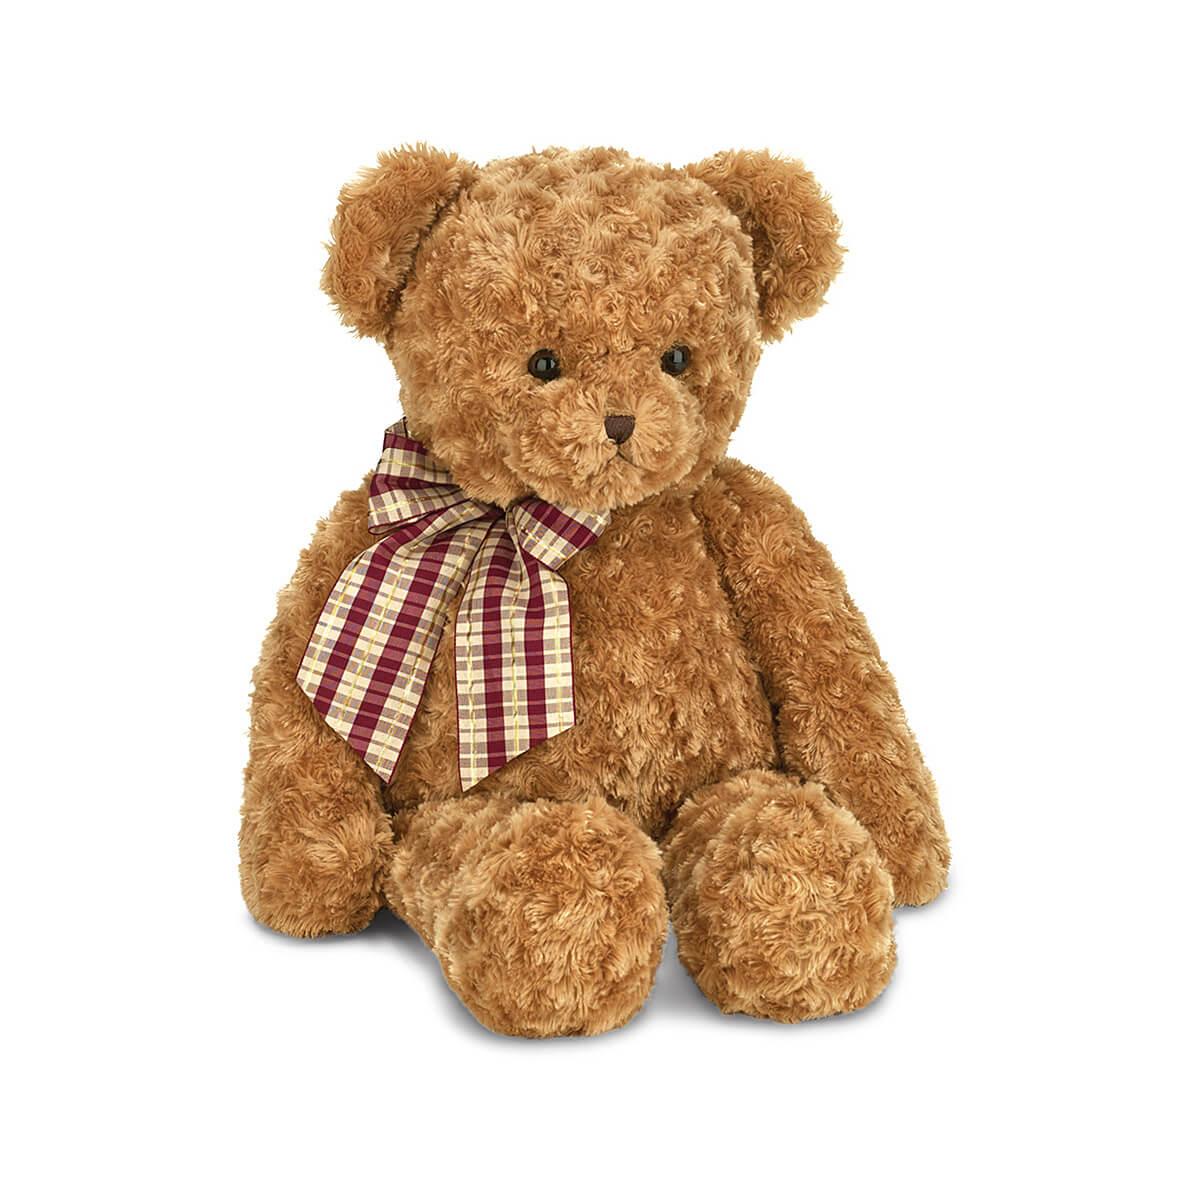  Wuggles Teddy Bear Plush Toy